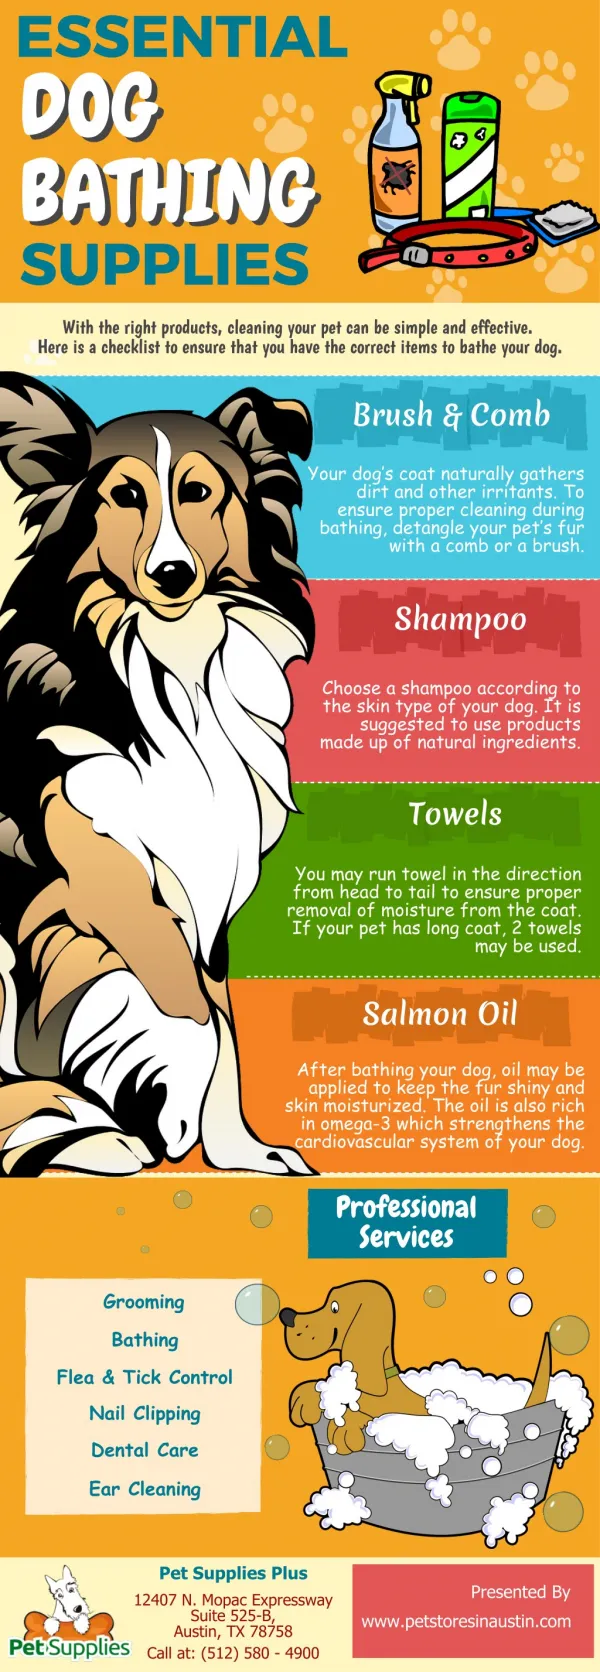 Essential Dog Bathing Supplies